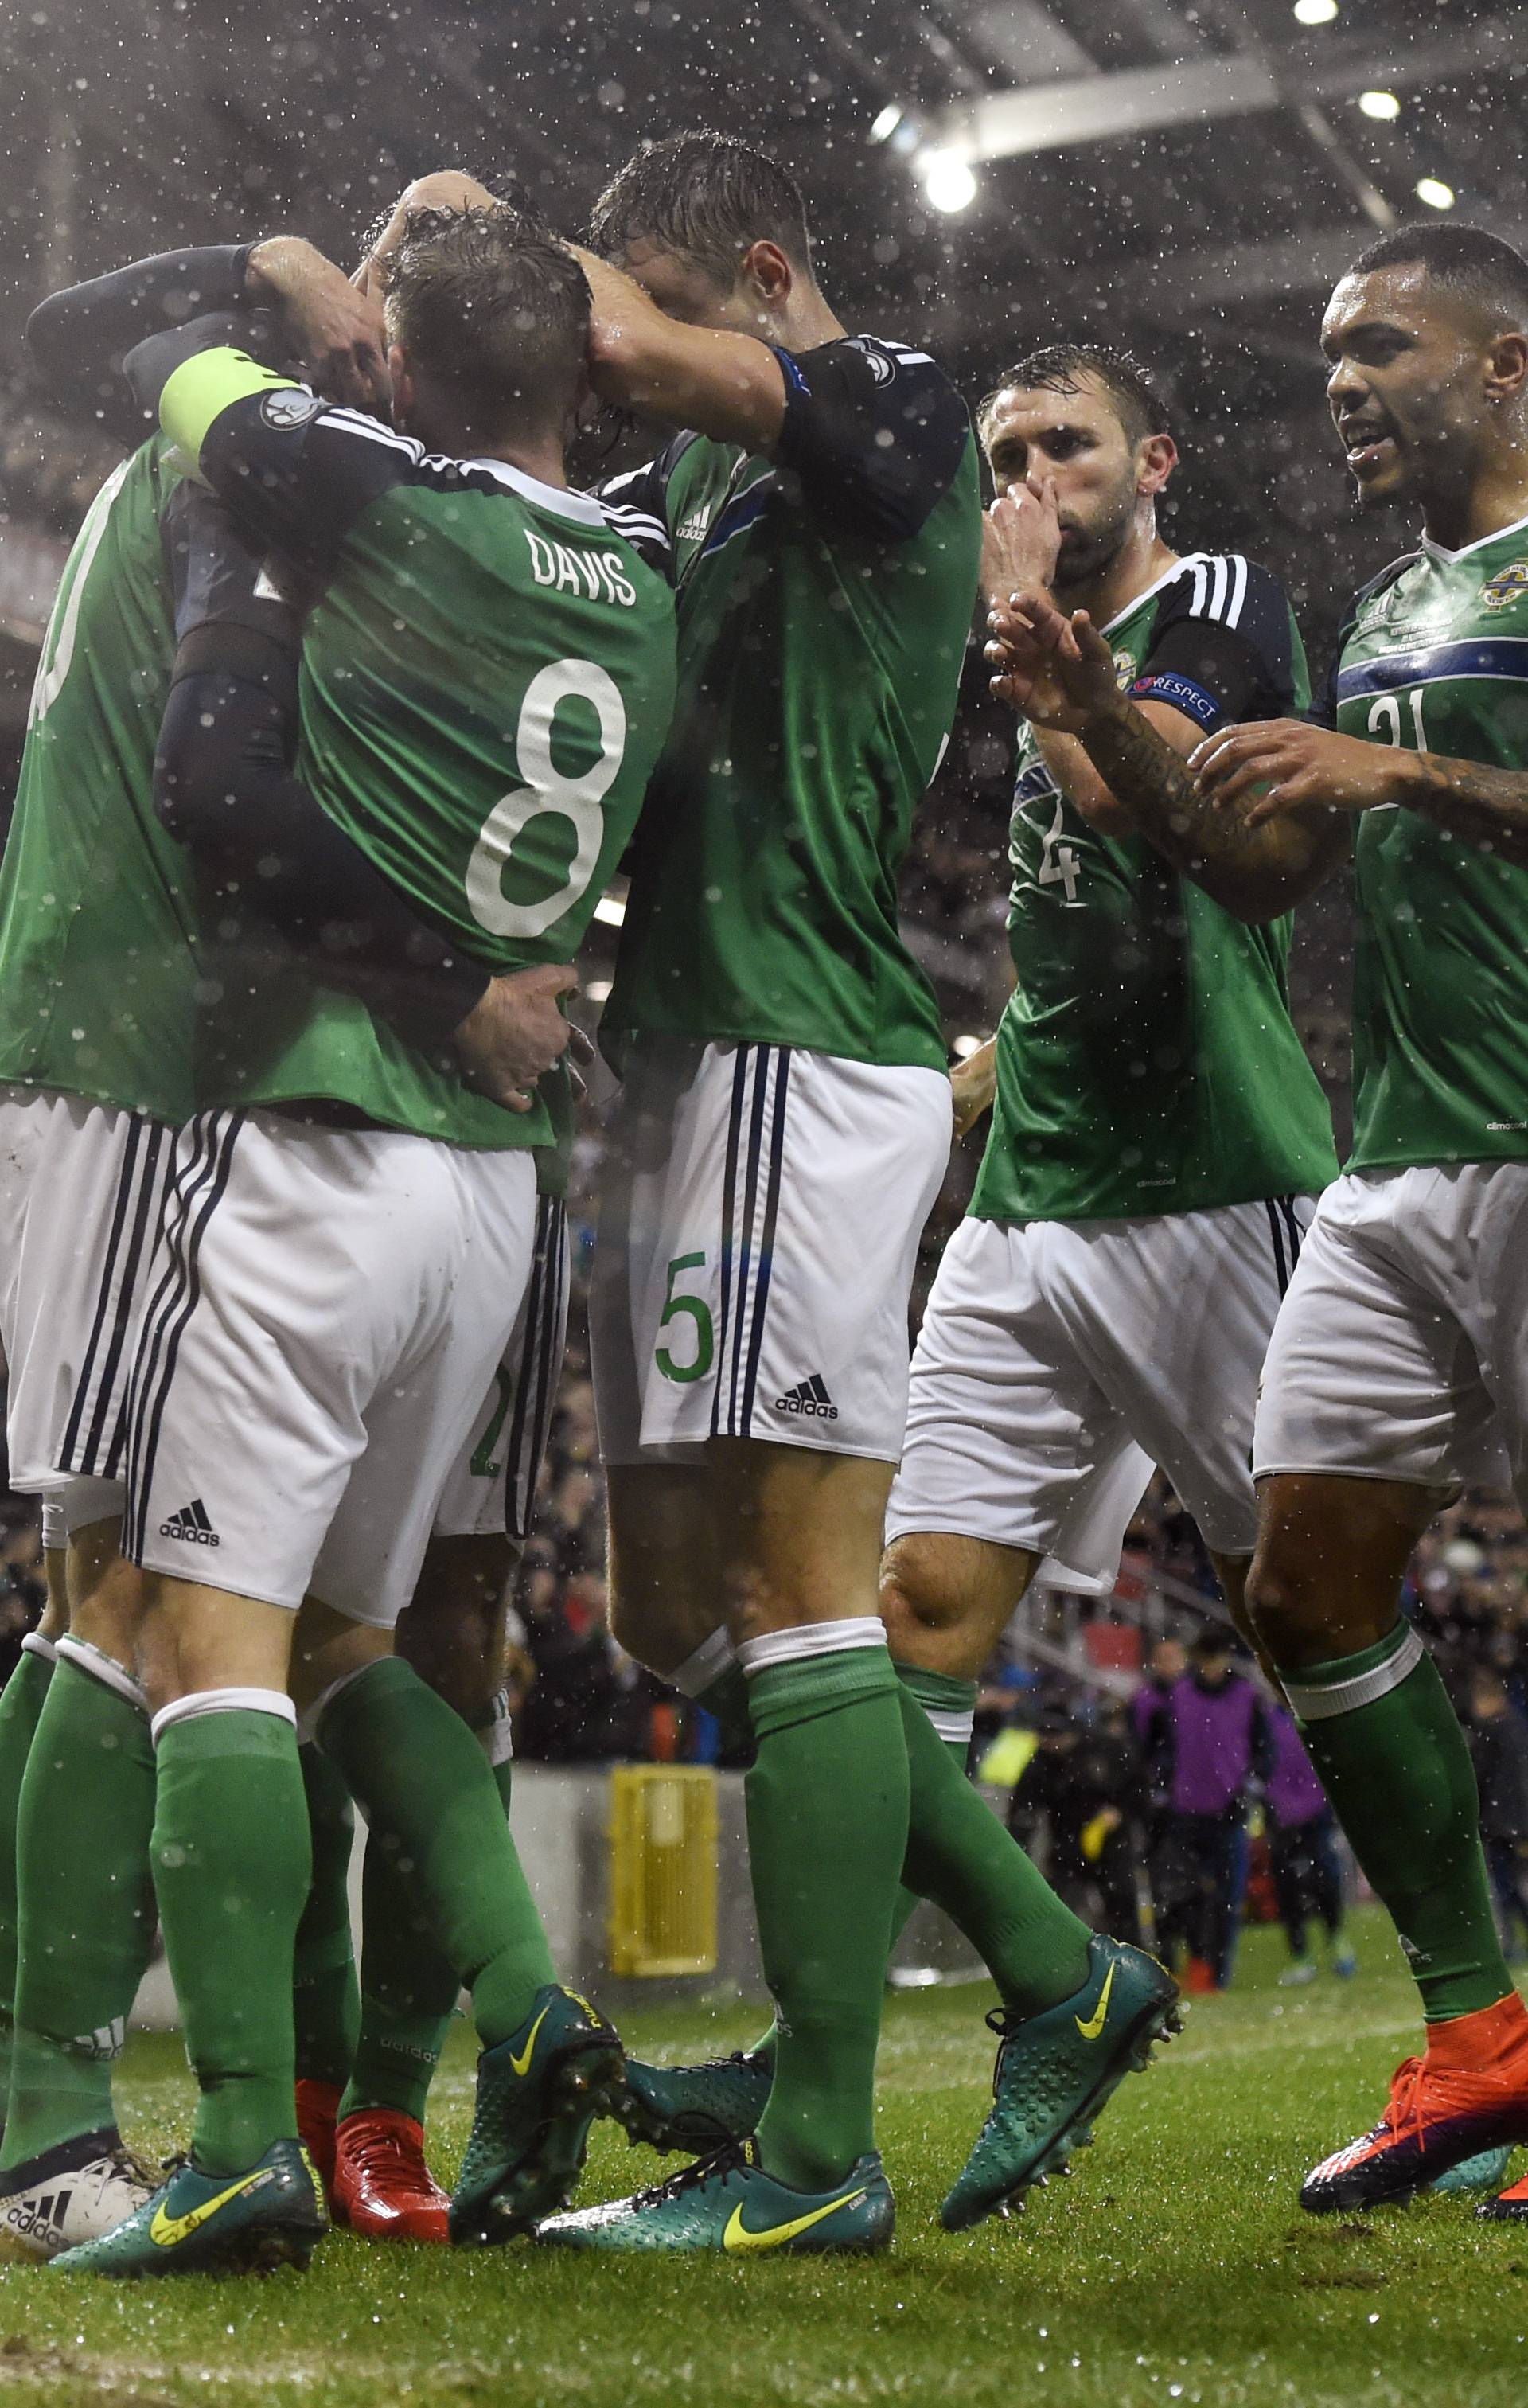 Northern Ireland's Kyle Lafferty celebrates scoring their first goal with team mates